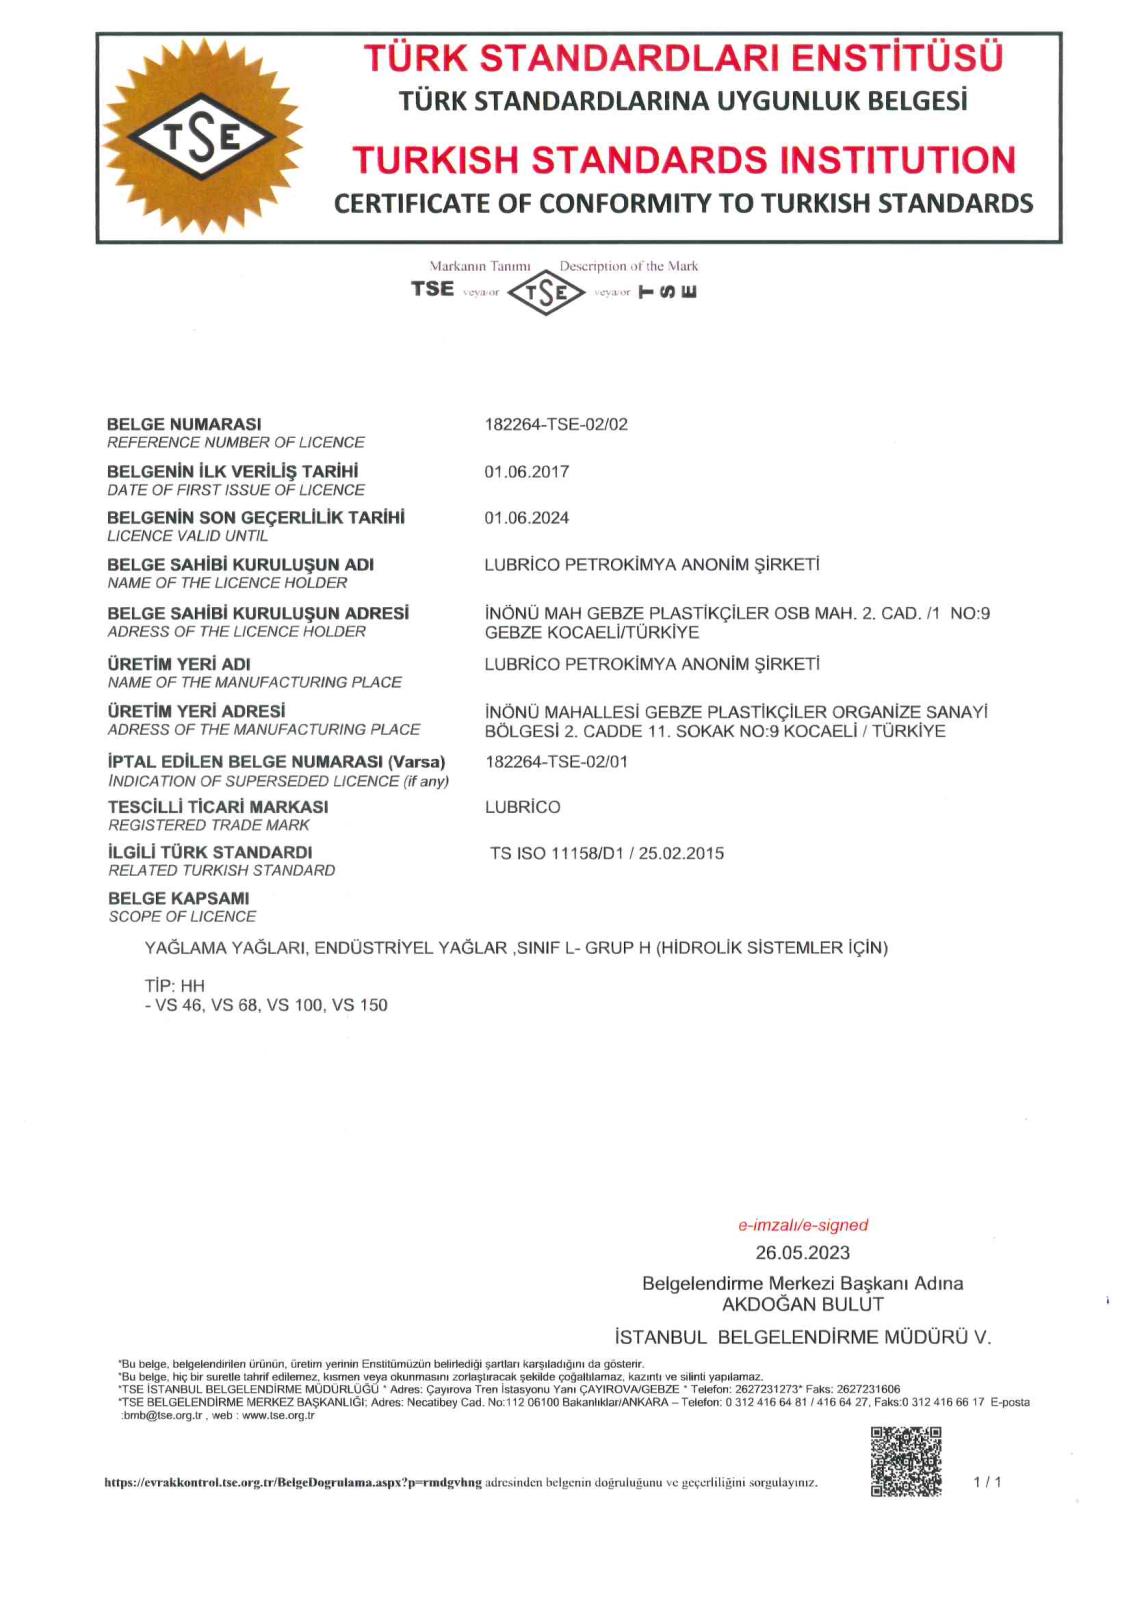 TSE Certificate of Conformity 11158